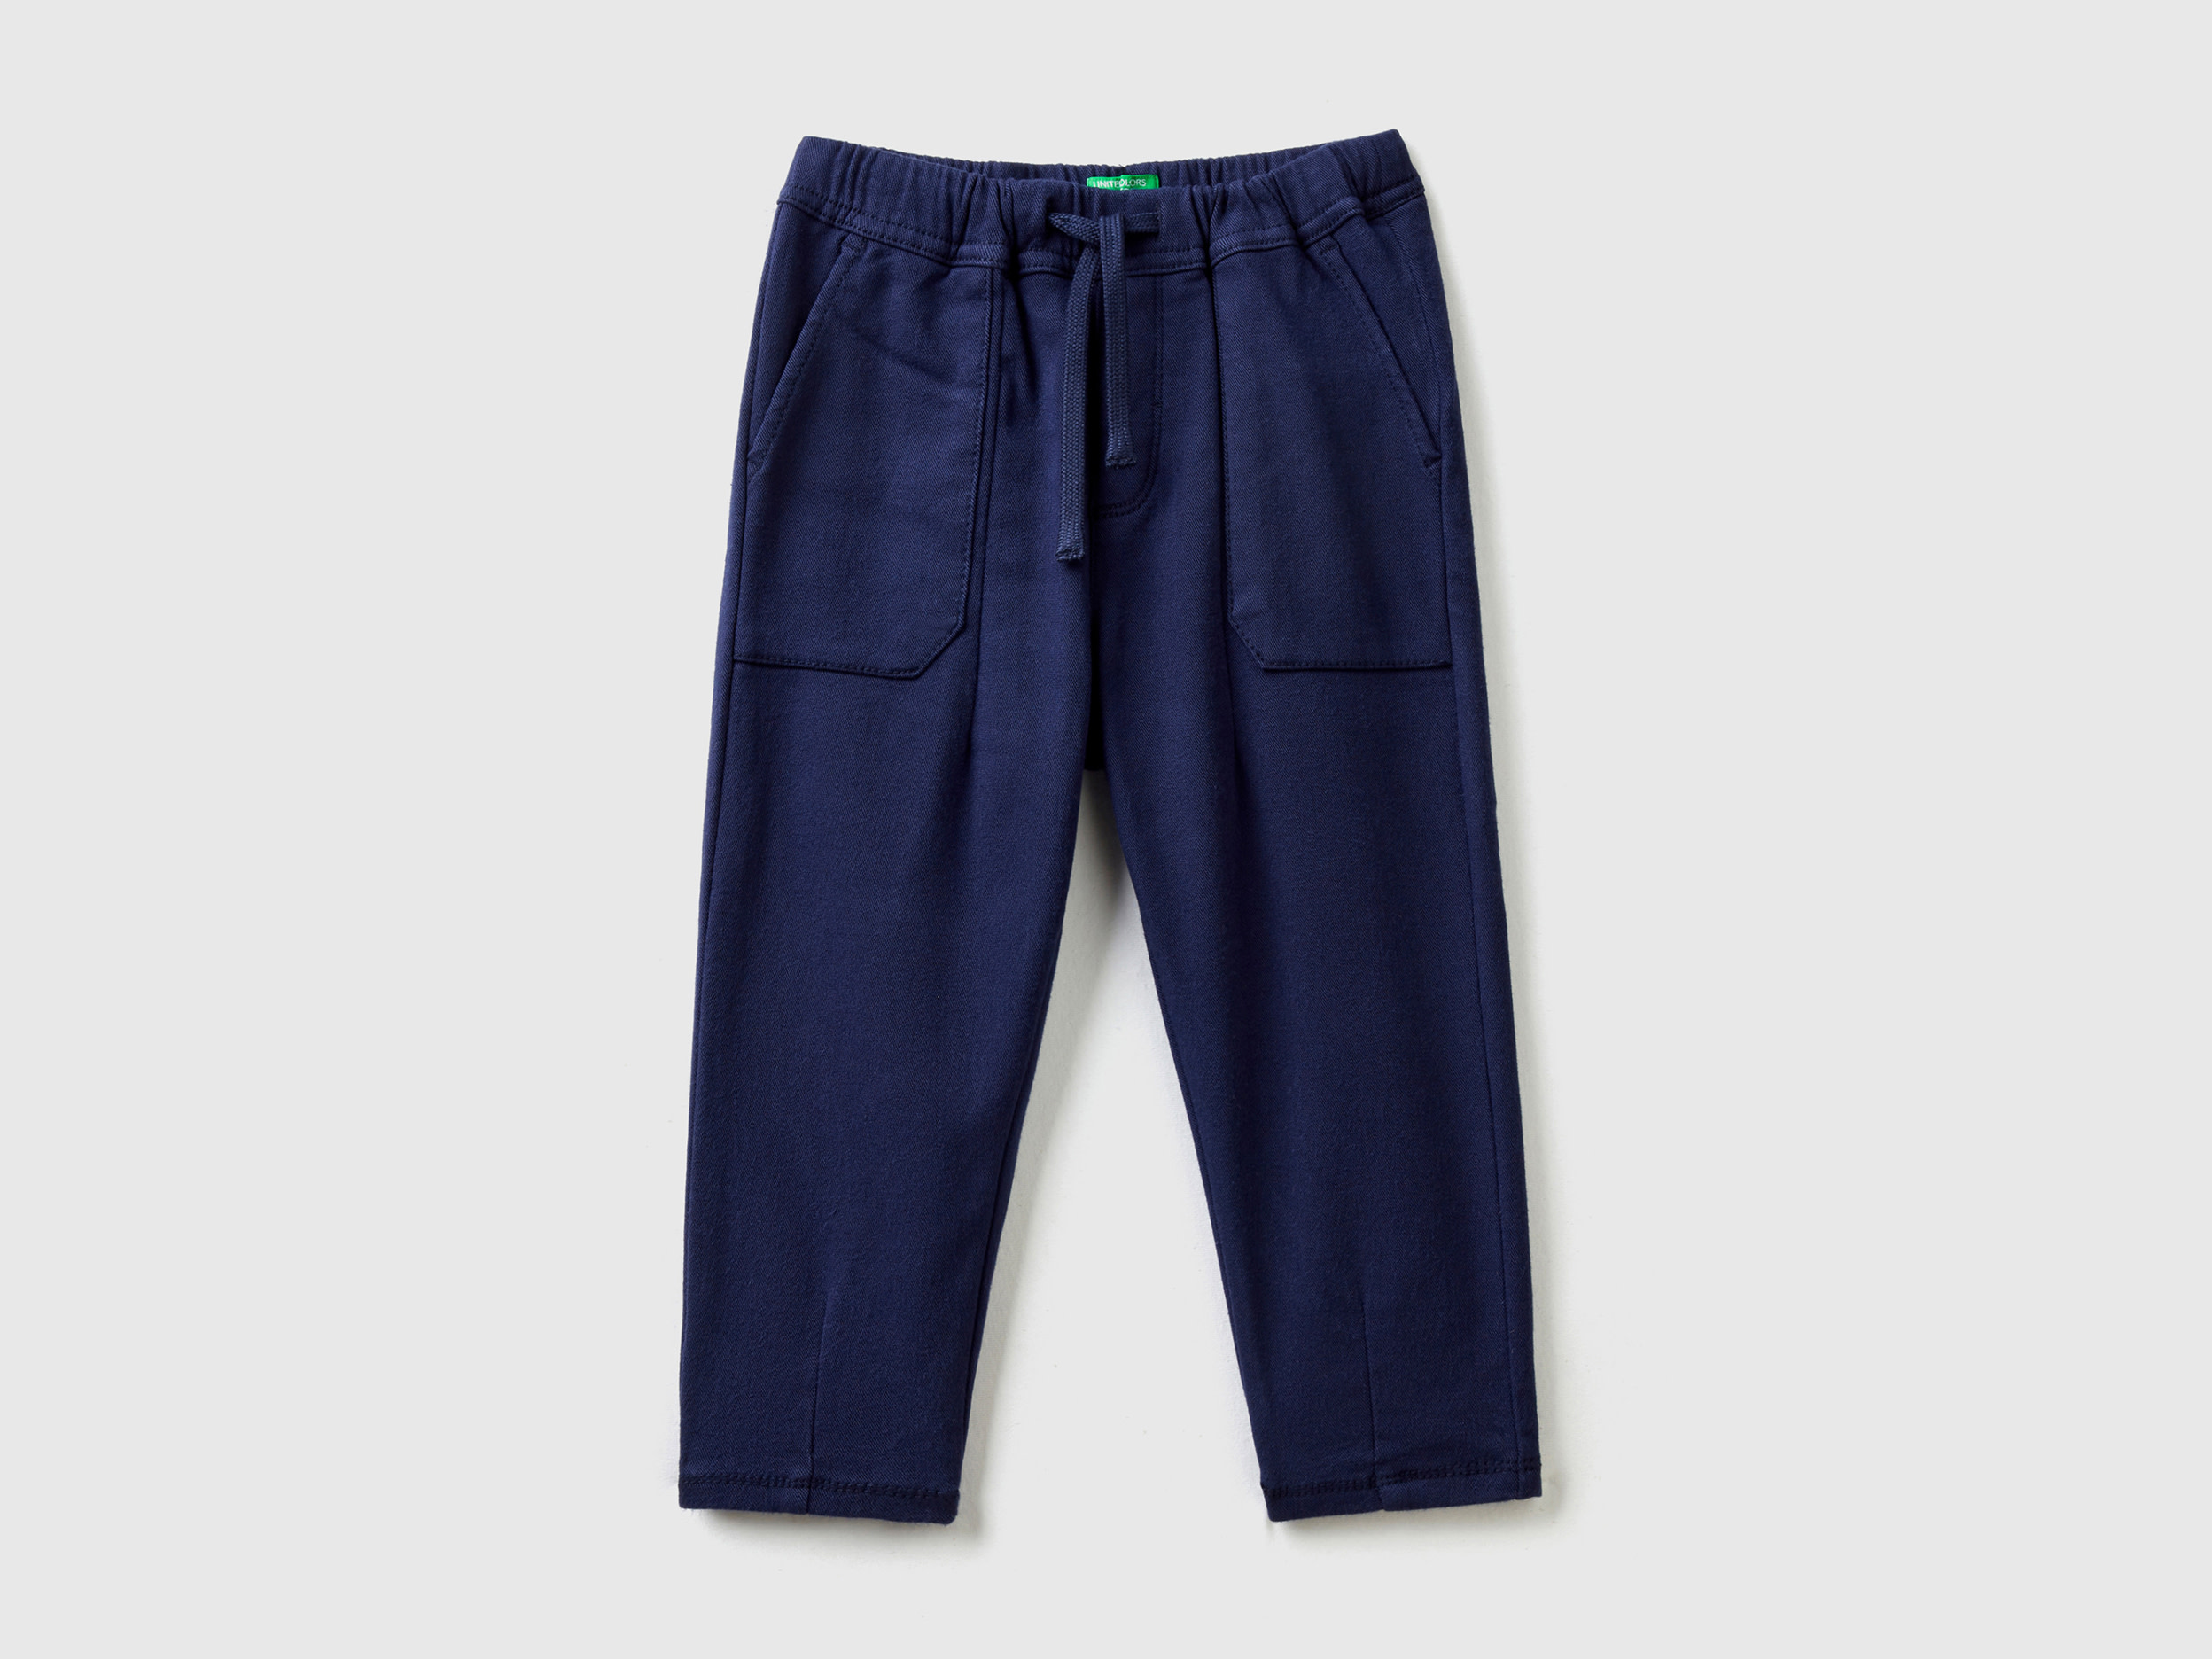 Benetton, Flowy Joggers With Maxi Pockets, size 2-3, Dark Blue, Kids